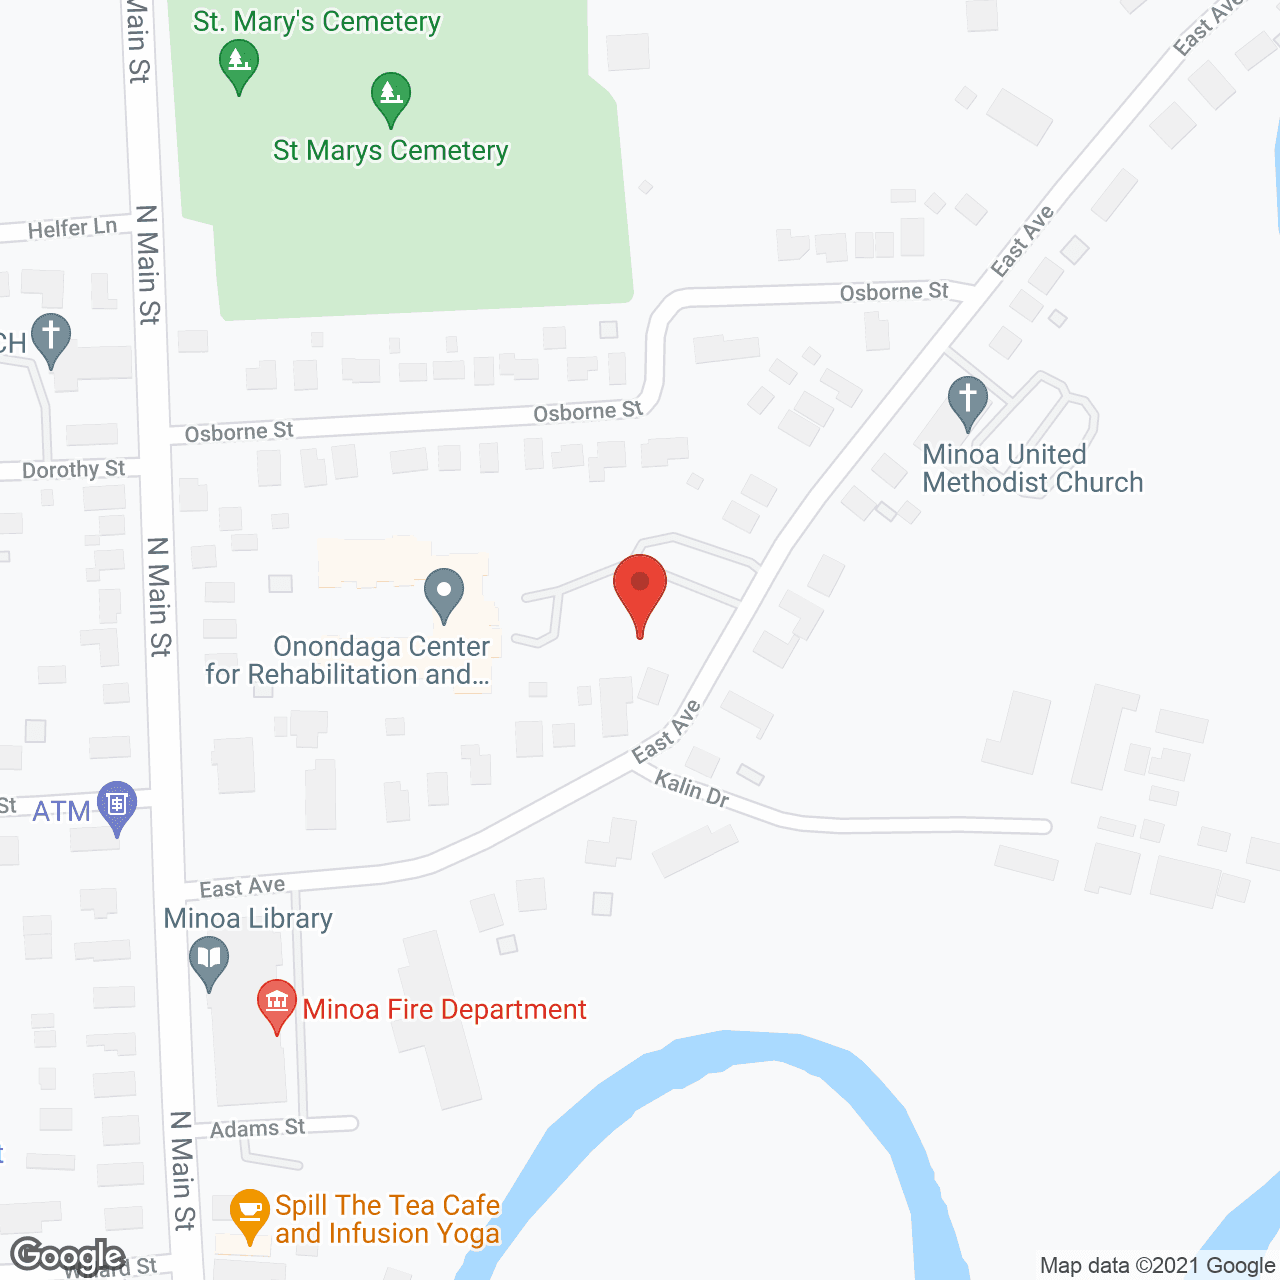 Onondaga Center for Rehabilitation and Nursing in google map